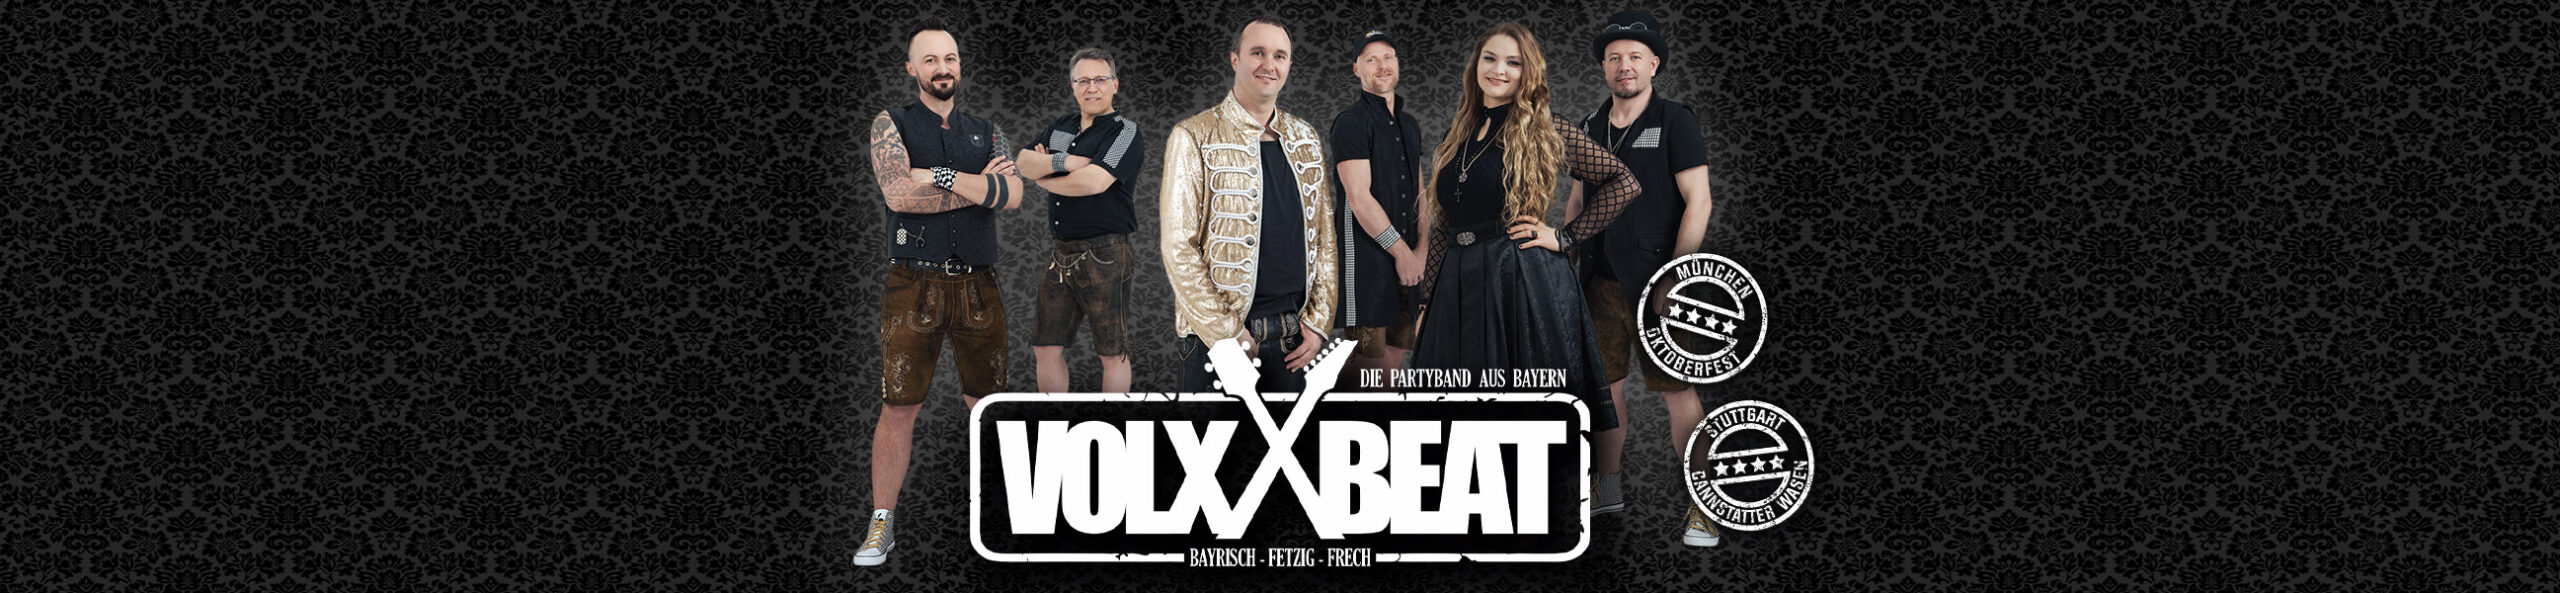 Volxxbeat